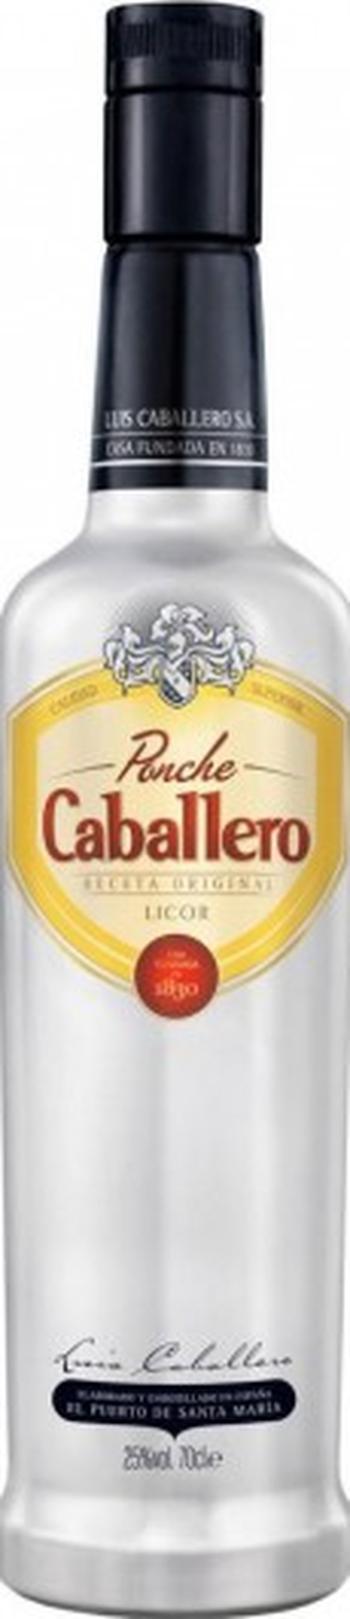 Ponche Caballero Spanish Liqueur 700ml